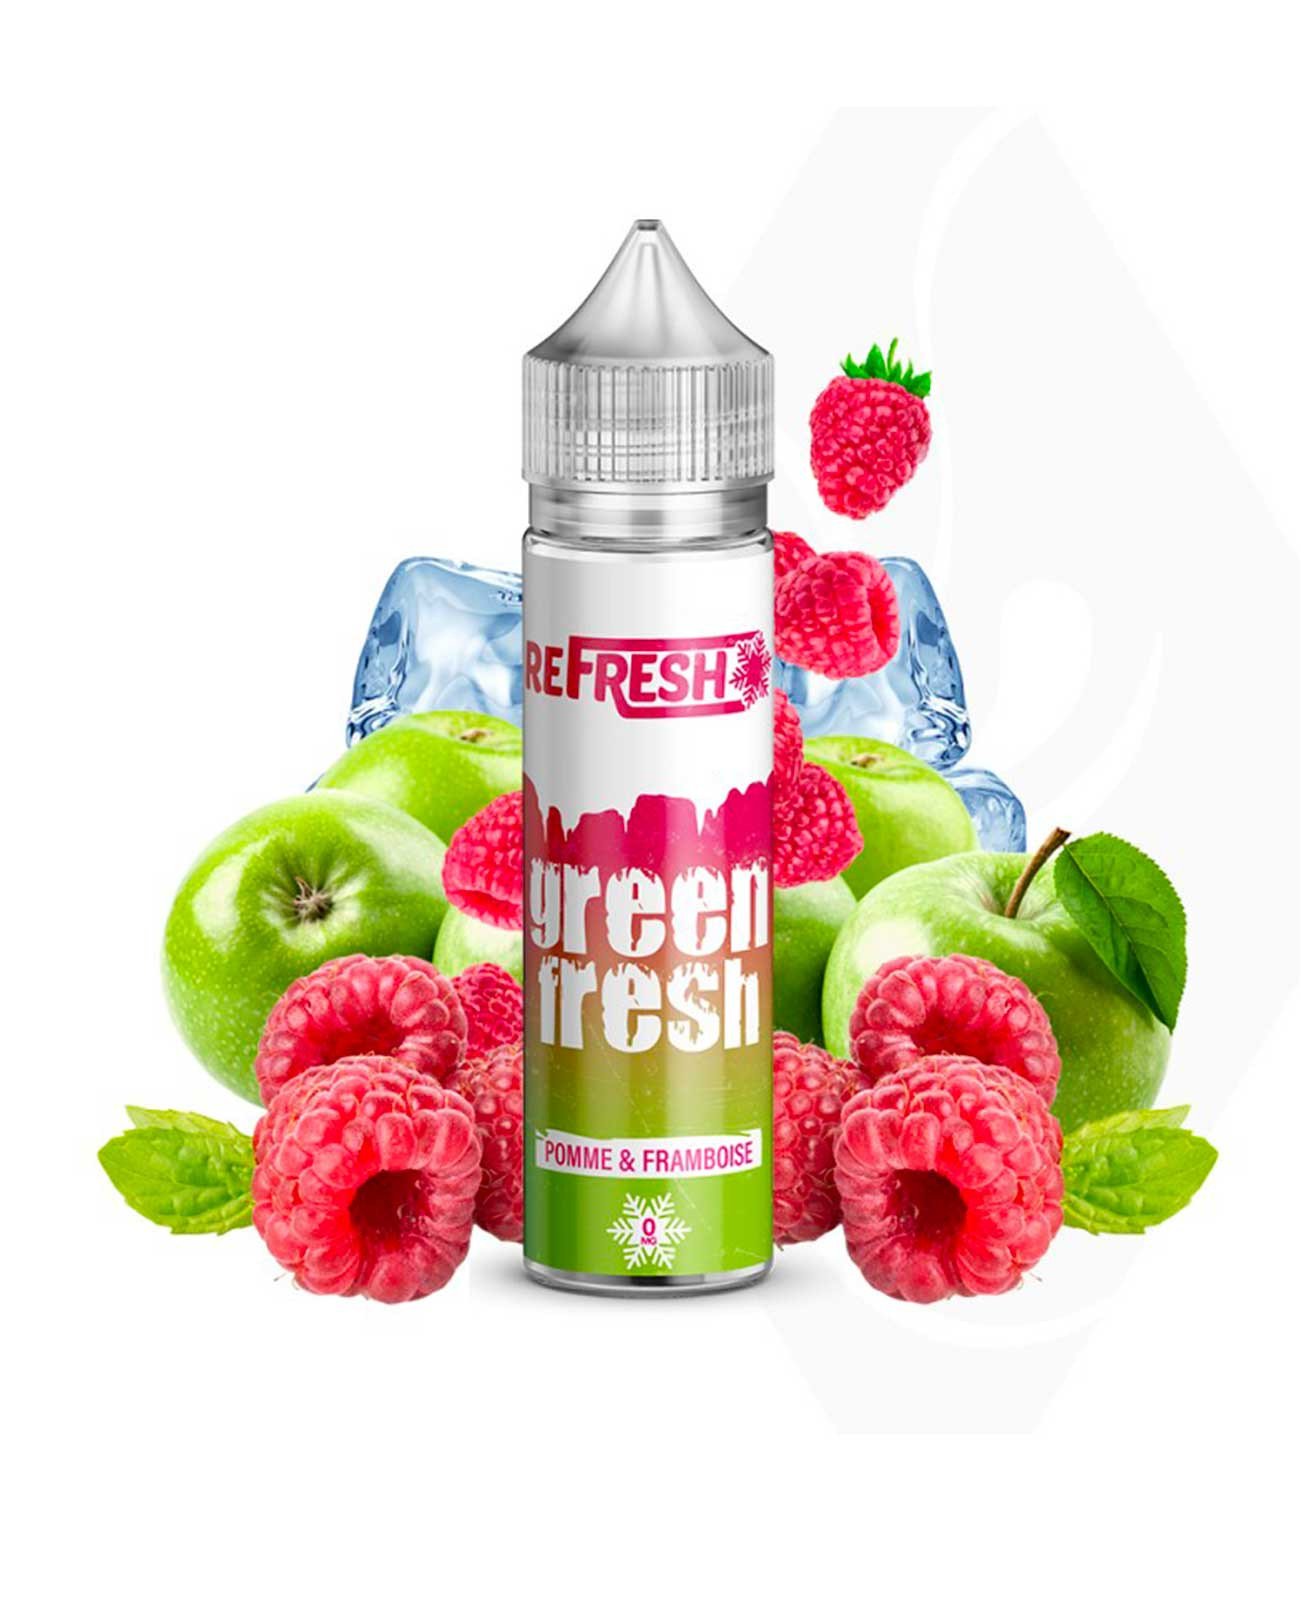 E-liquide grand format pour vapote Refresh Green Fresh saveur pomme granny smith et framboise